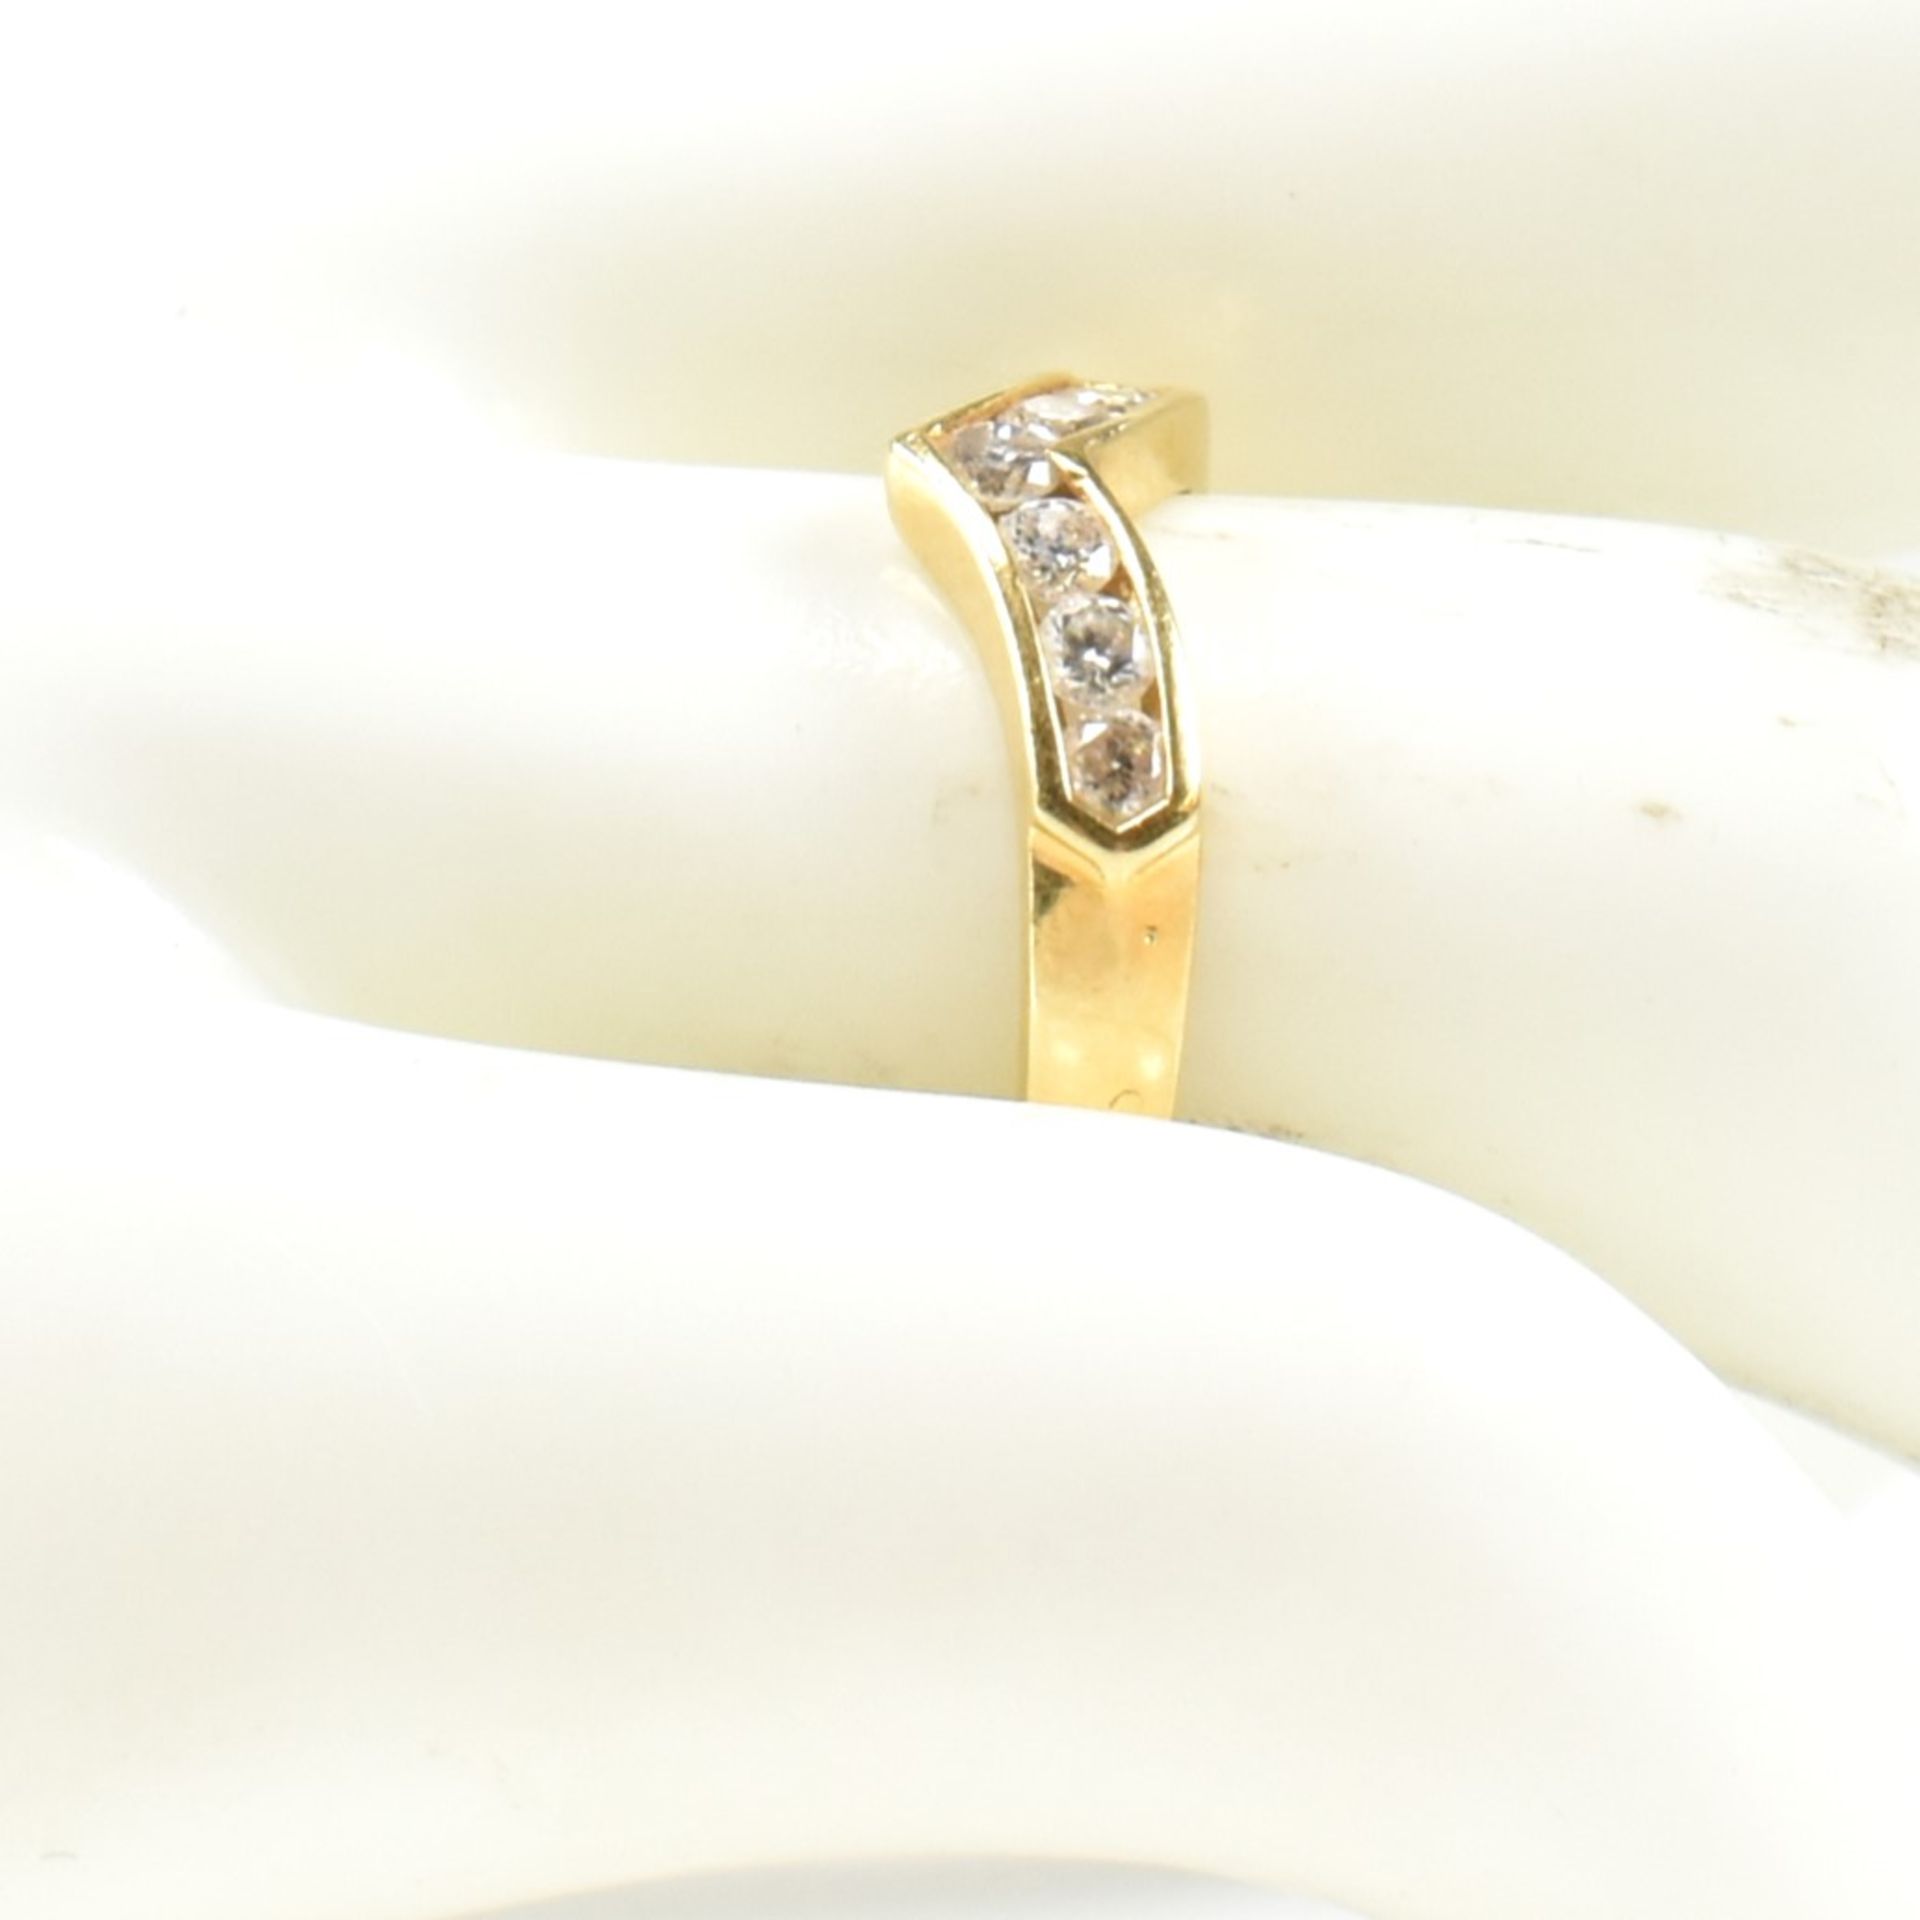 HALLMARKED 18CT GOLD & DIAMOND WISHBONE RING - Image 9 of 9